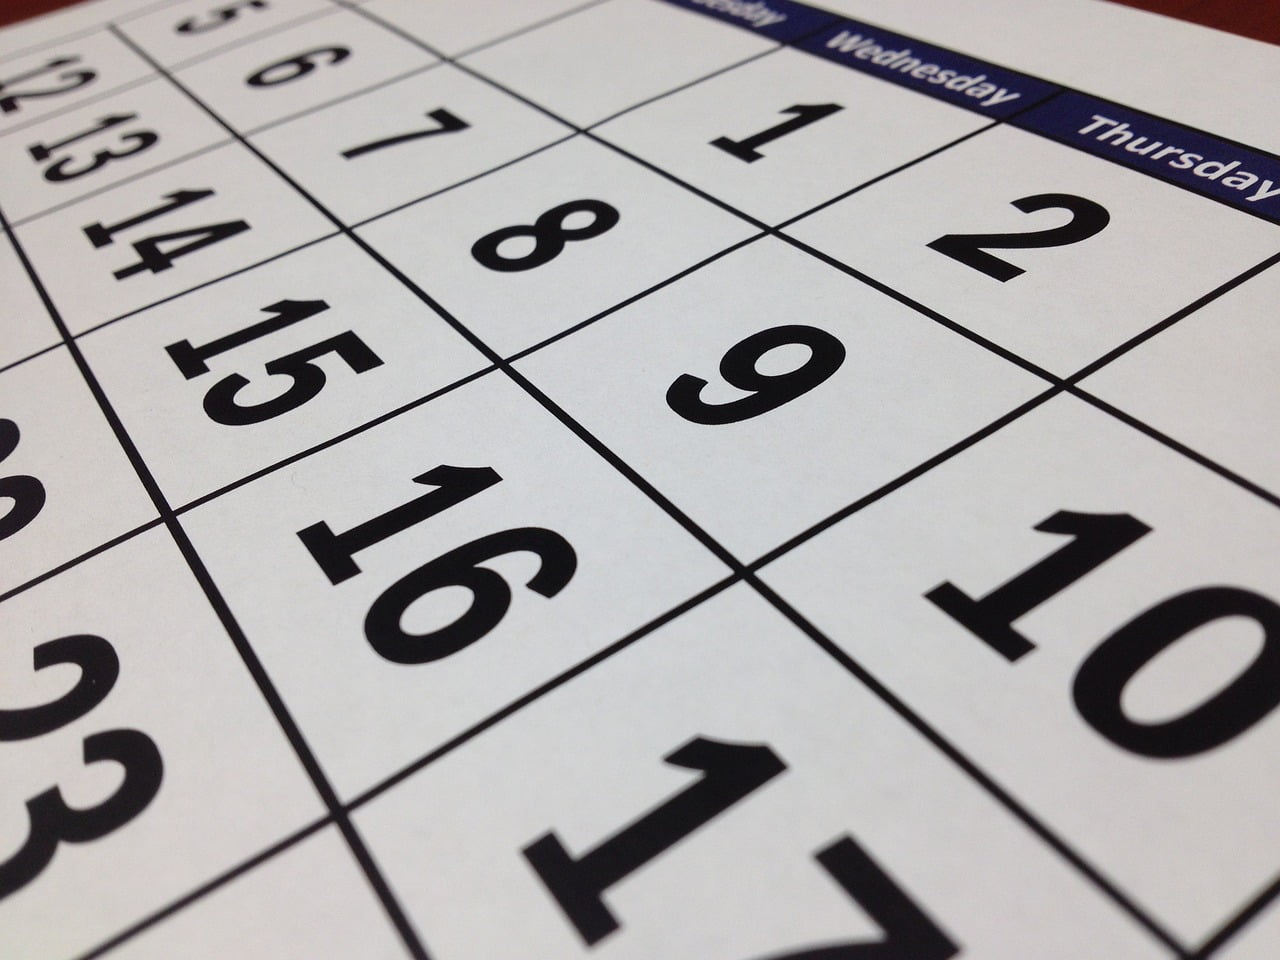 A photo of a calendar's dates